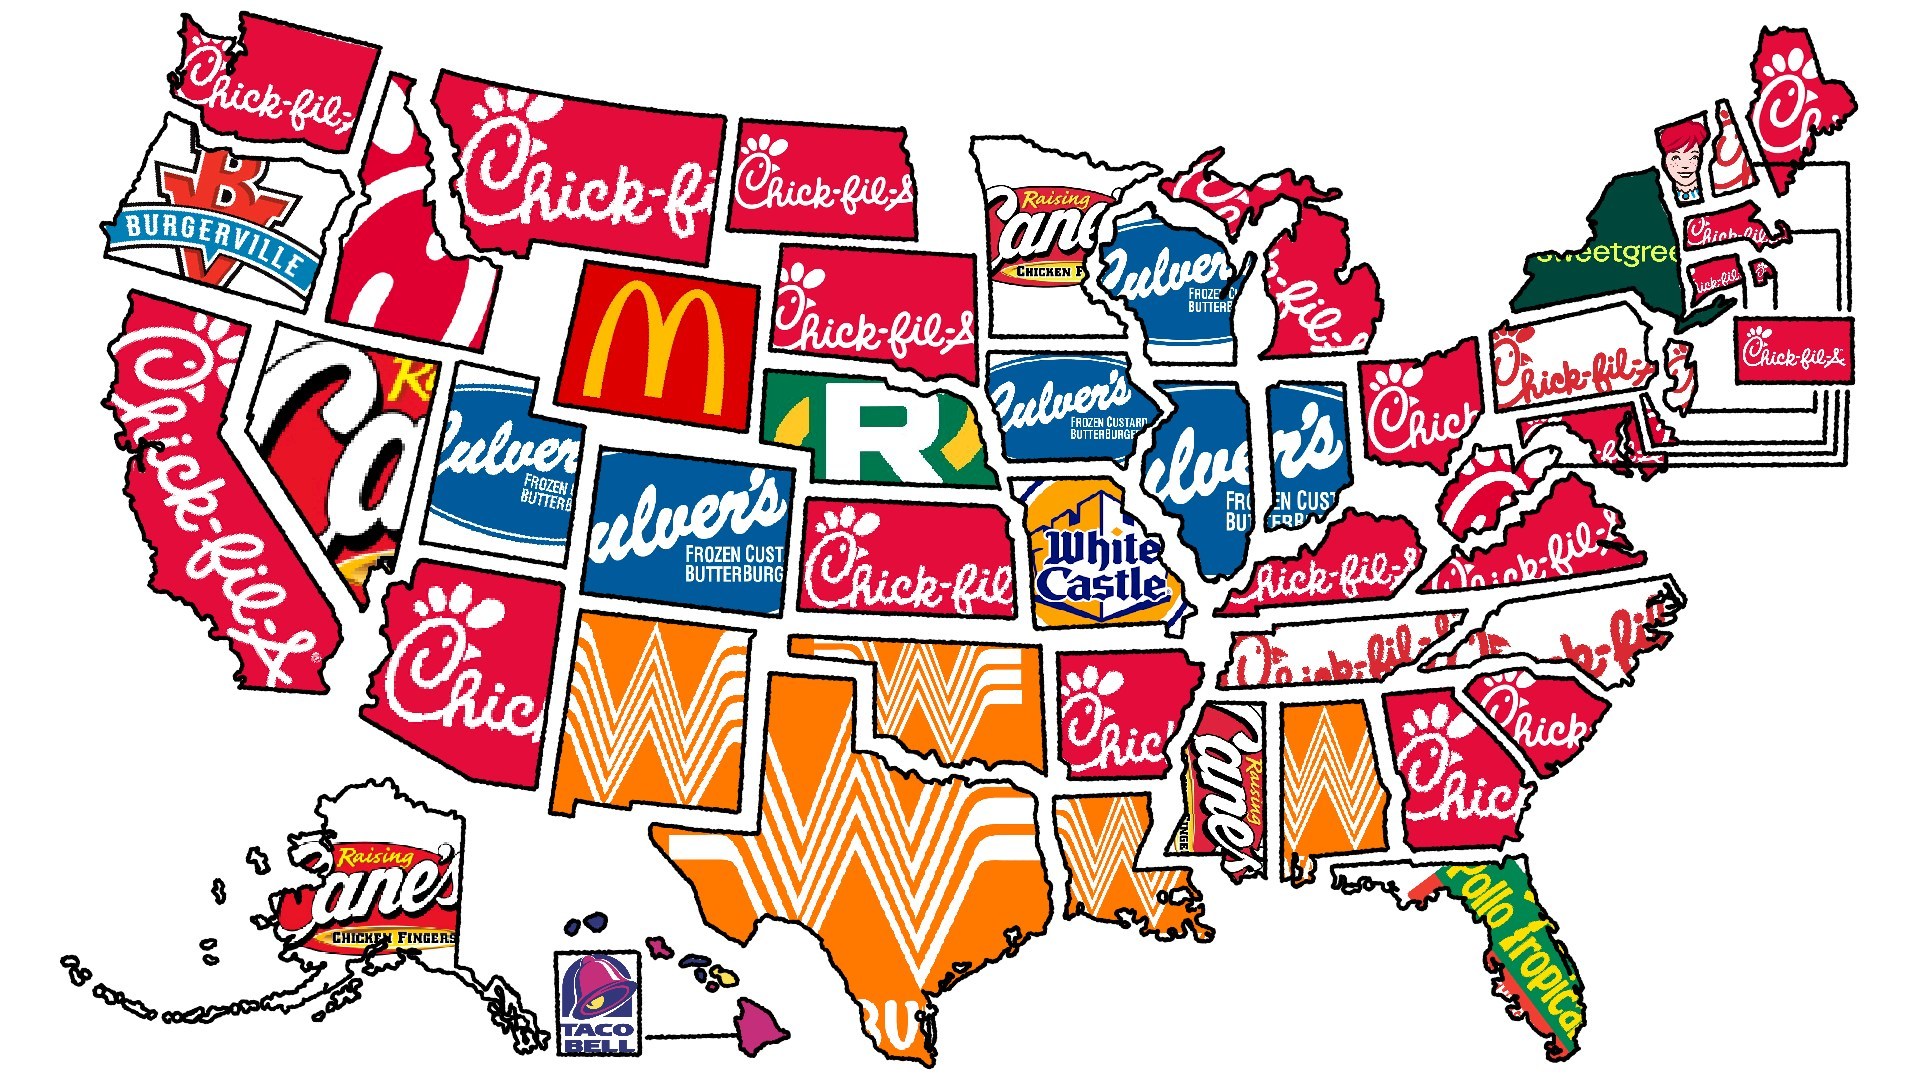 USA's Food & Beverage Industry